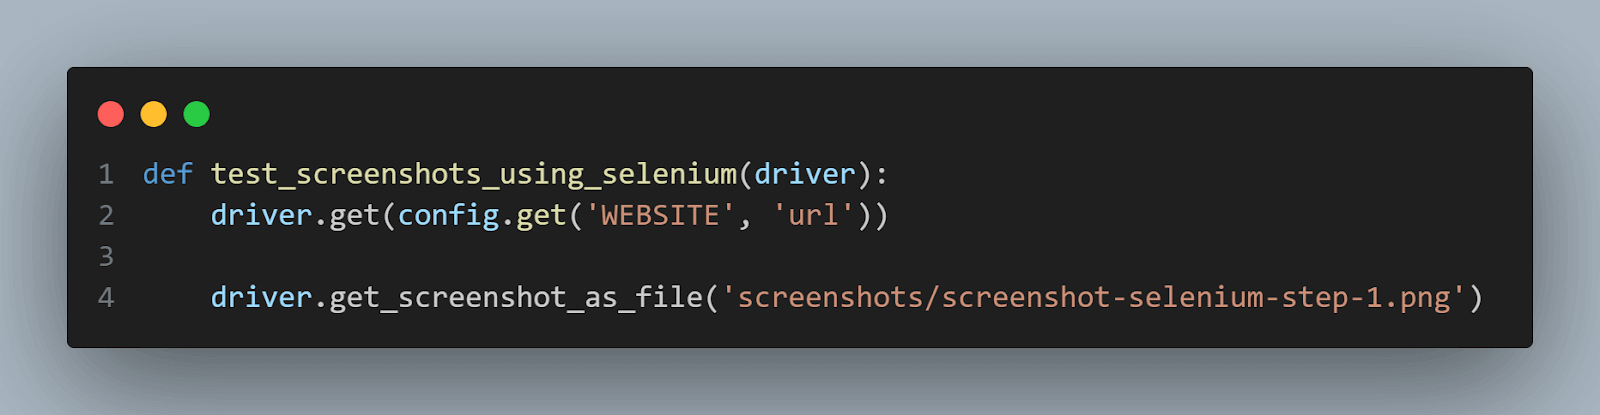 test_screenshots_using_selenium